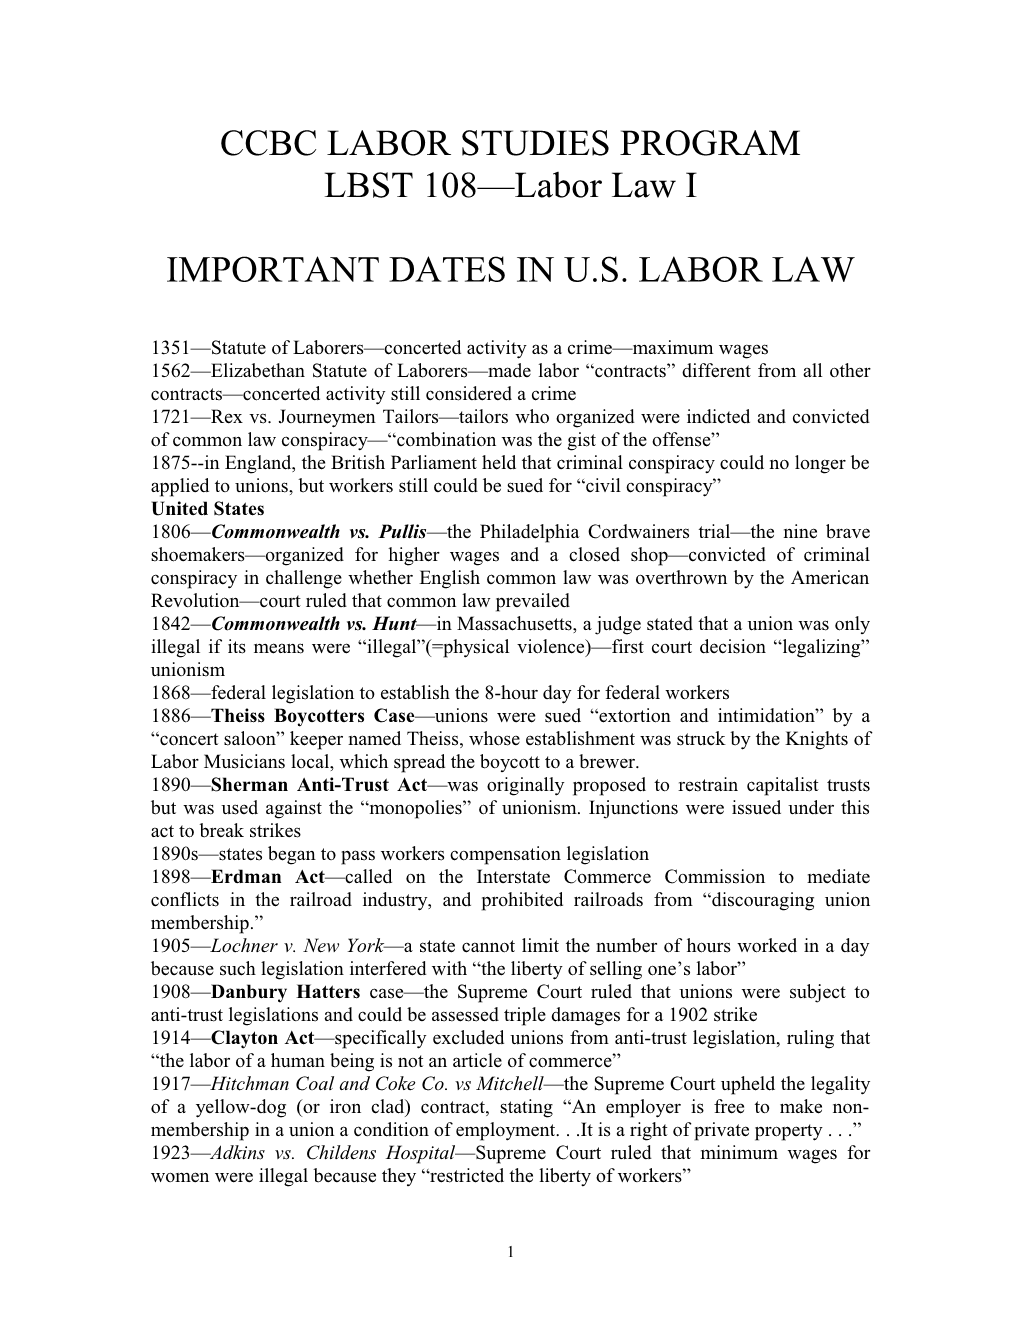 LBST 108 Labor Law I